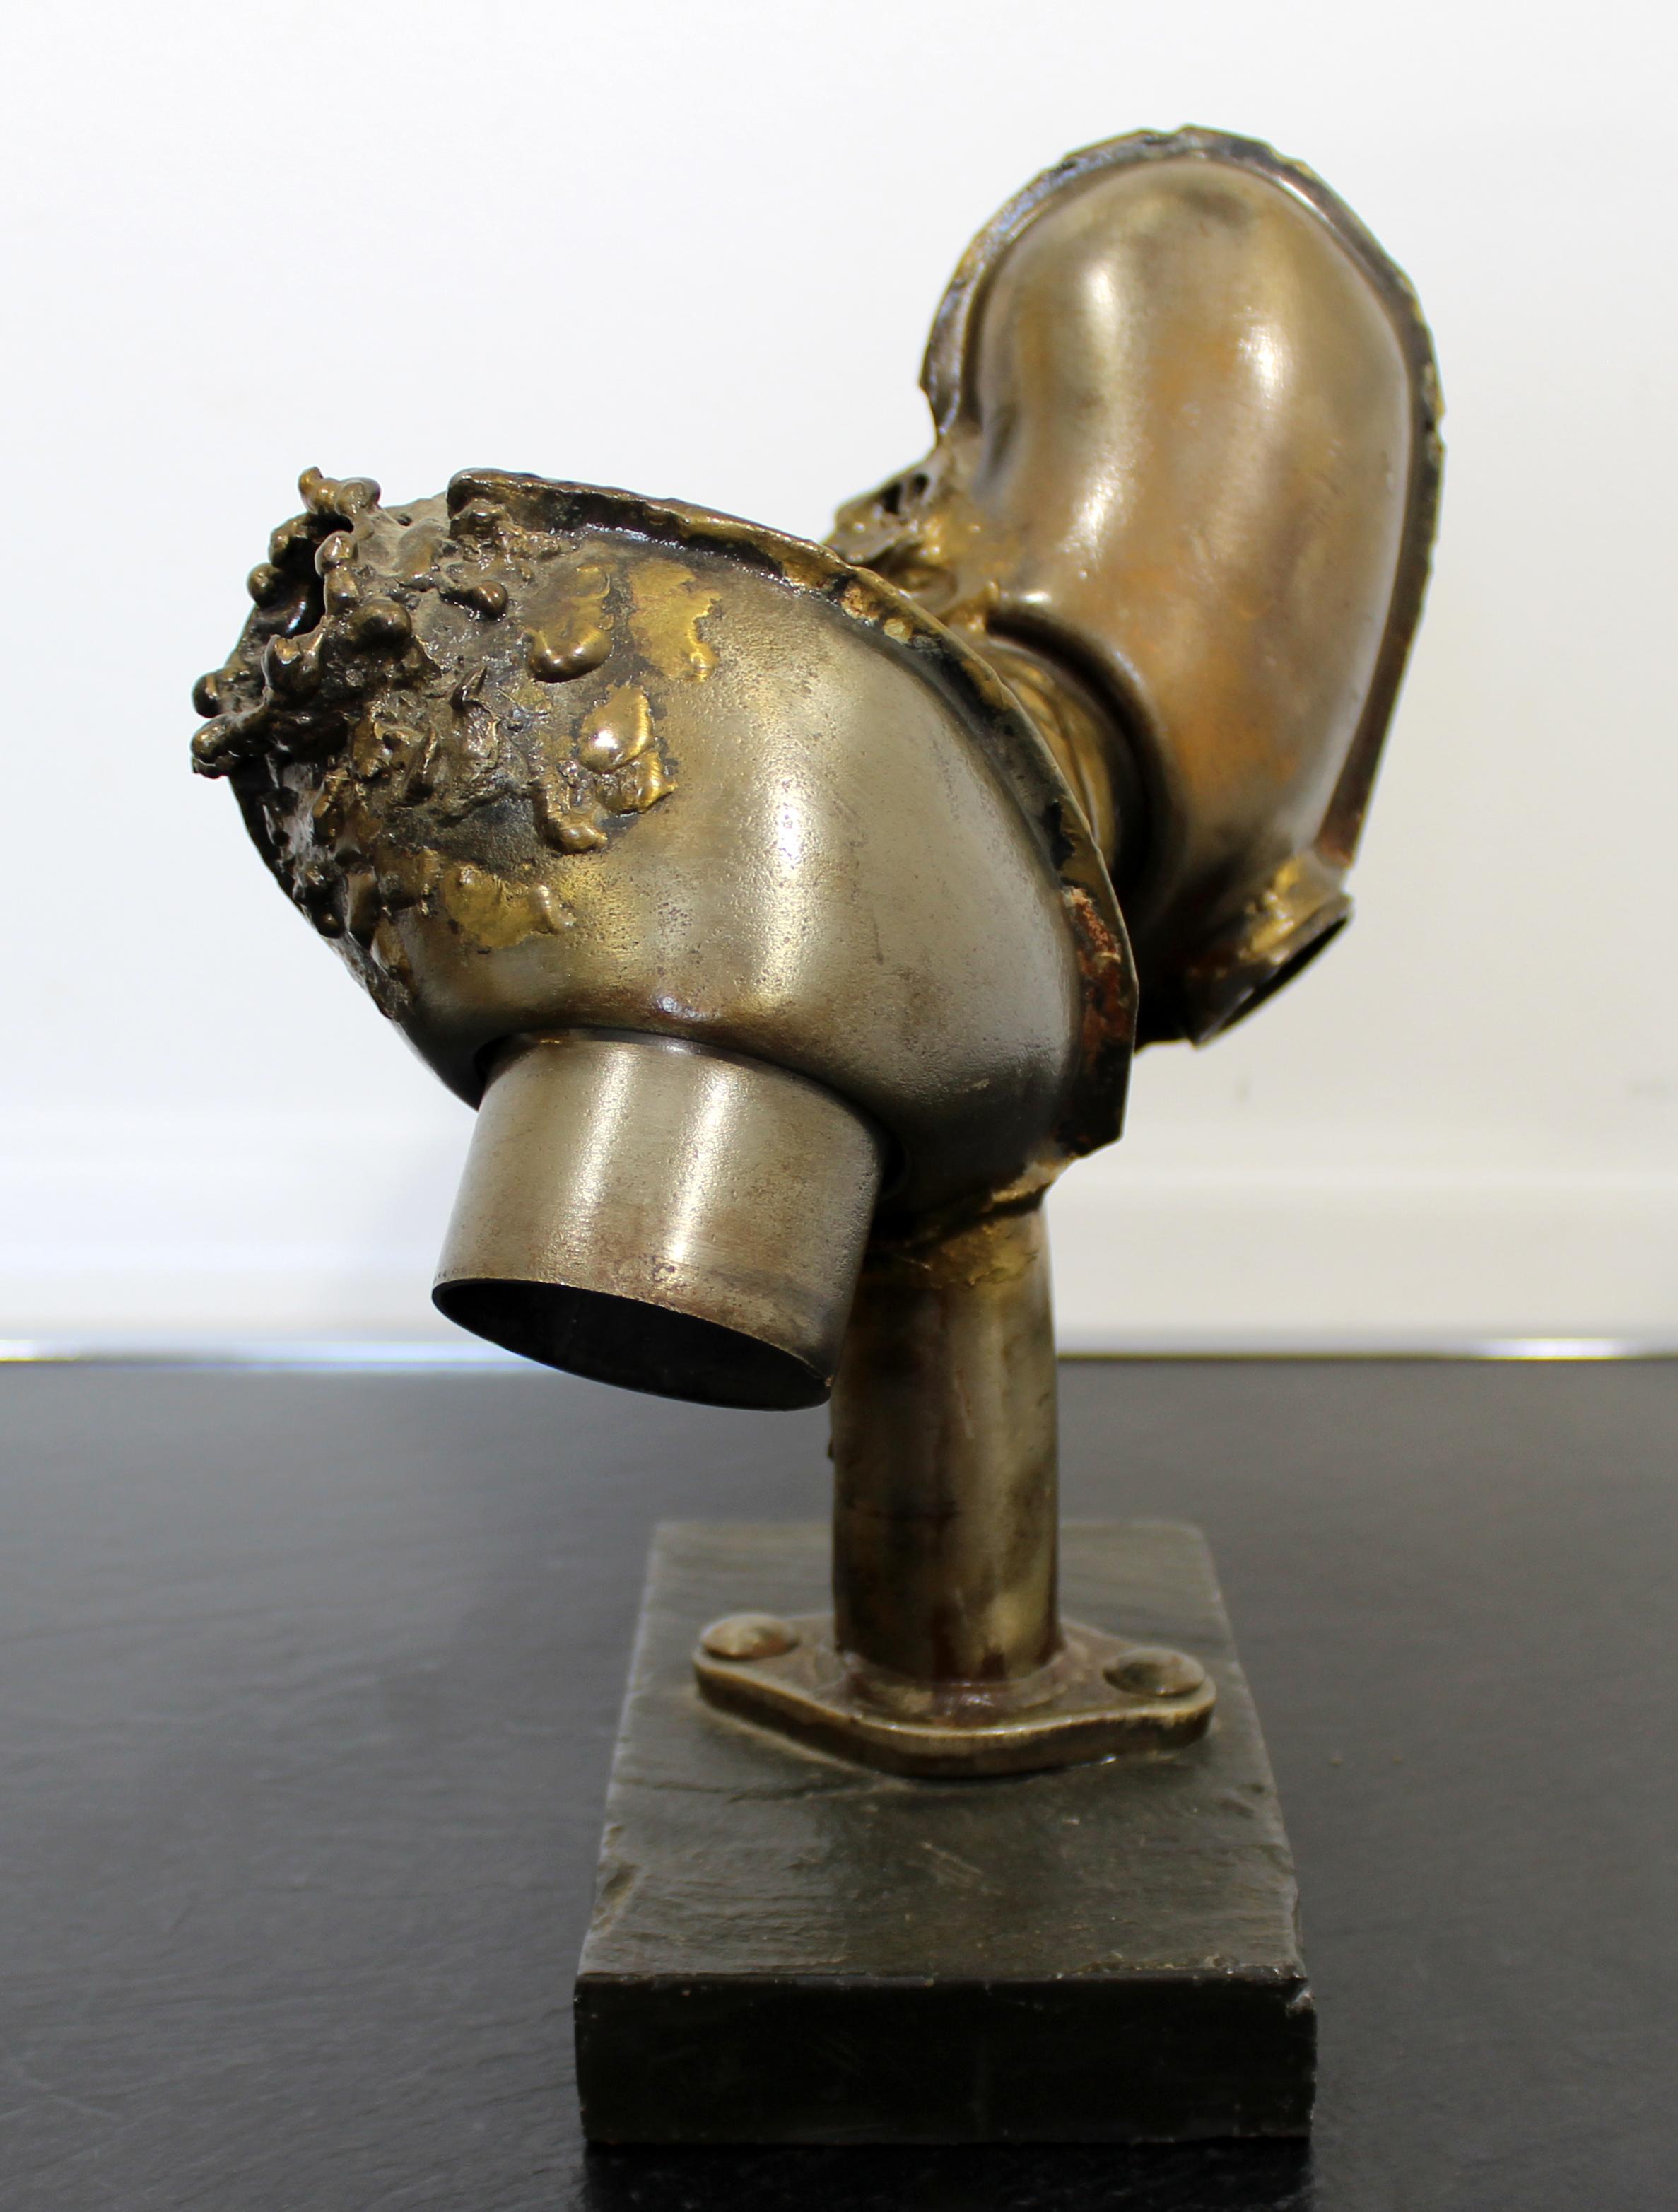 James Nani Hearts 55 Brutalist Modern Abstract Sculpture 2